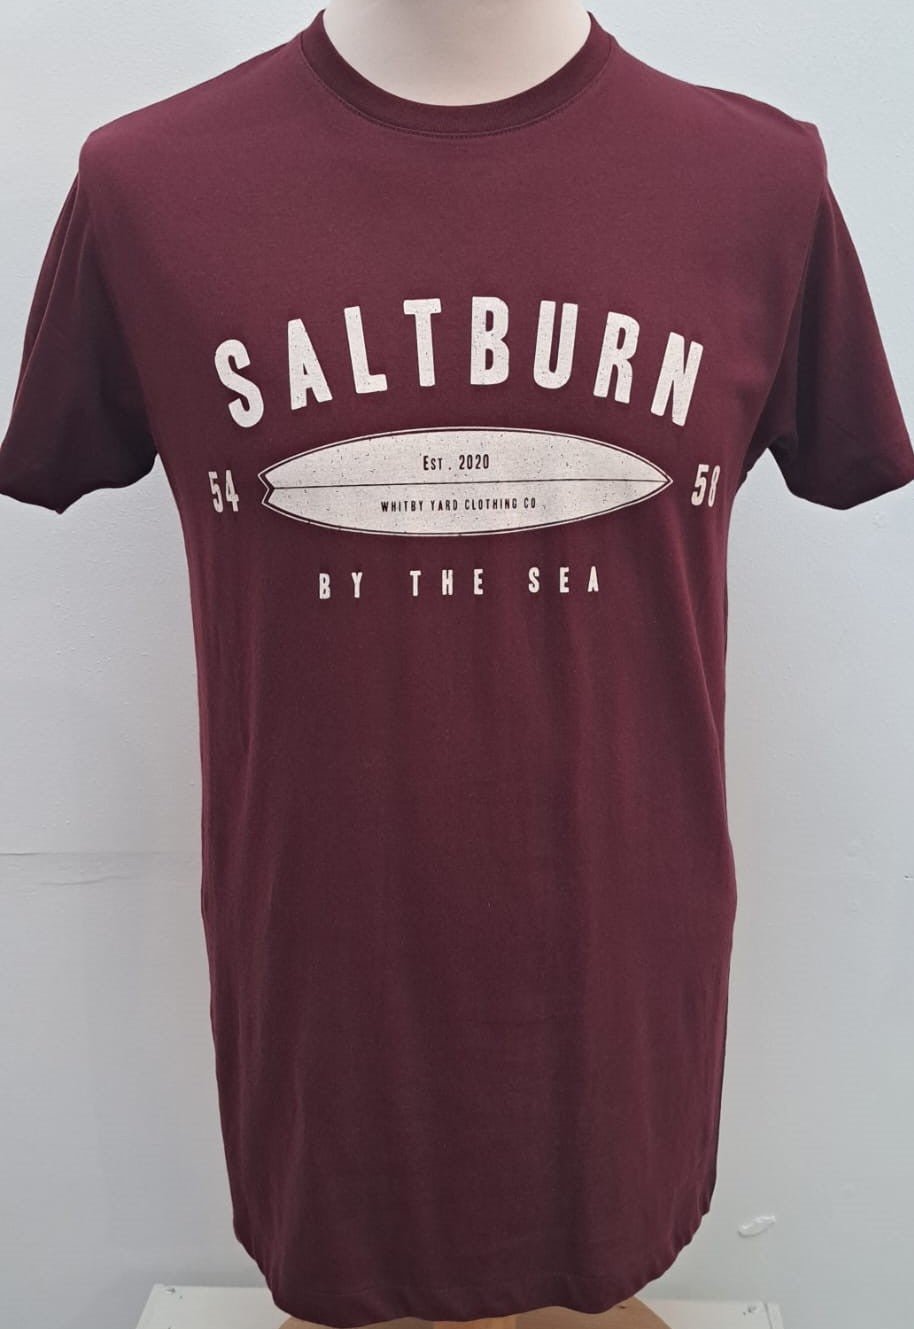 Unisex Saltburn co ordinates T shirt in Burgundy